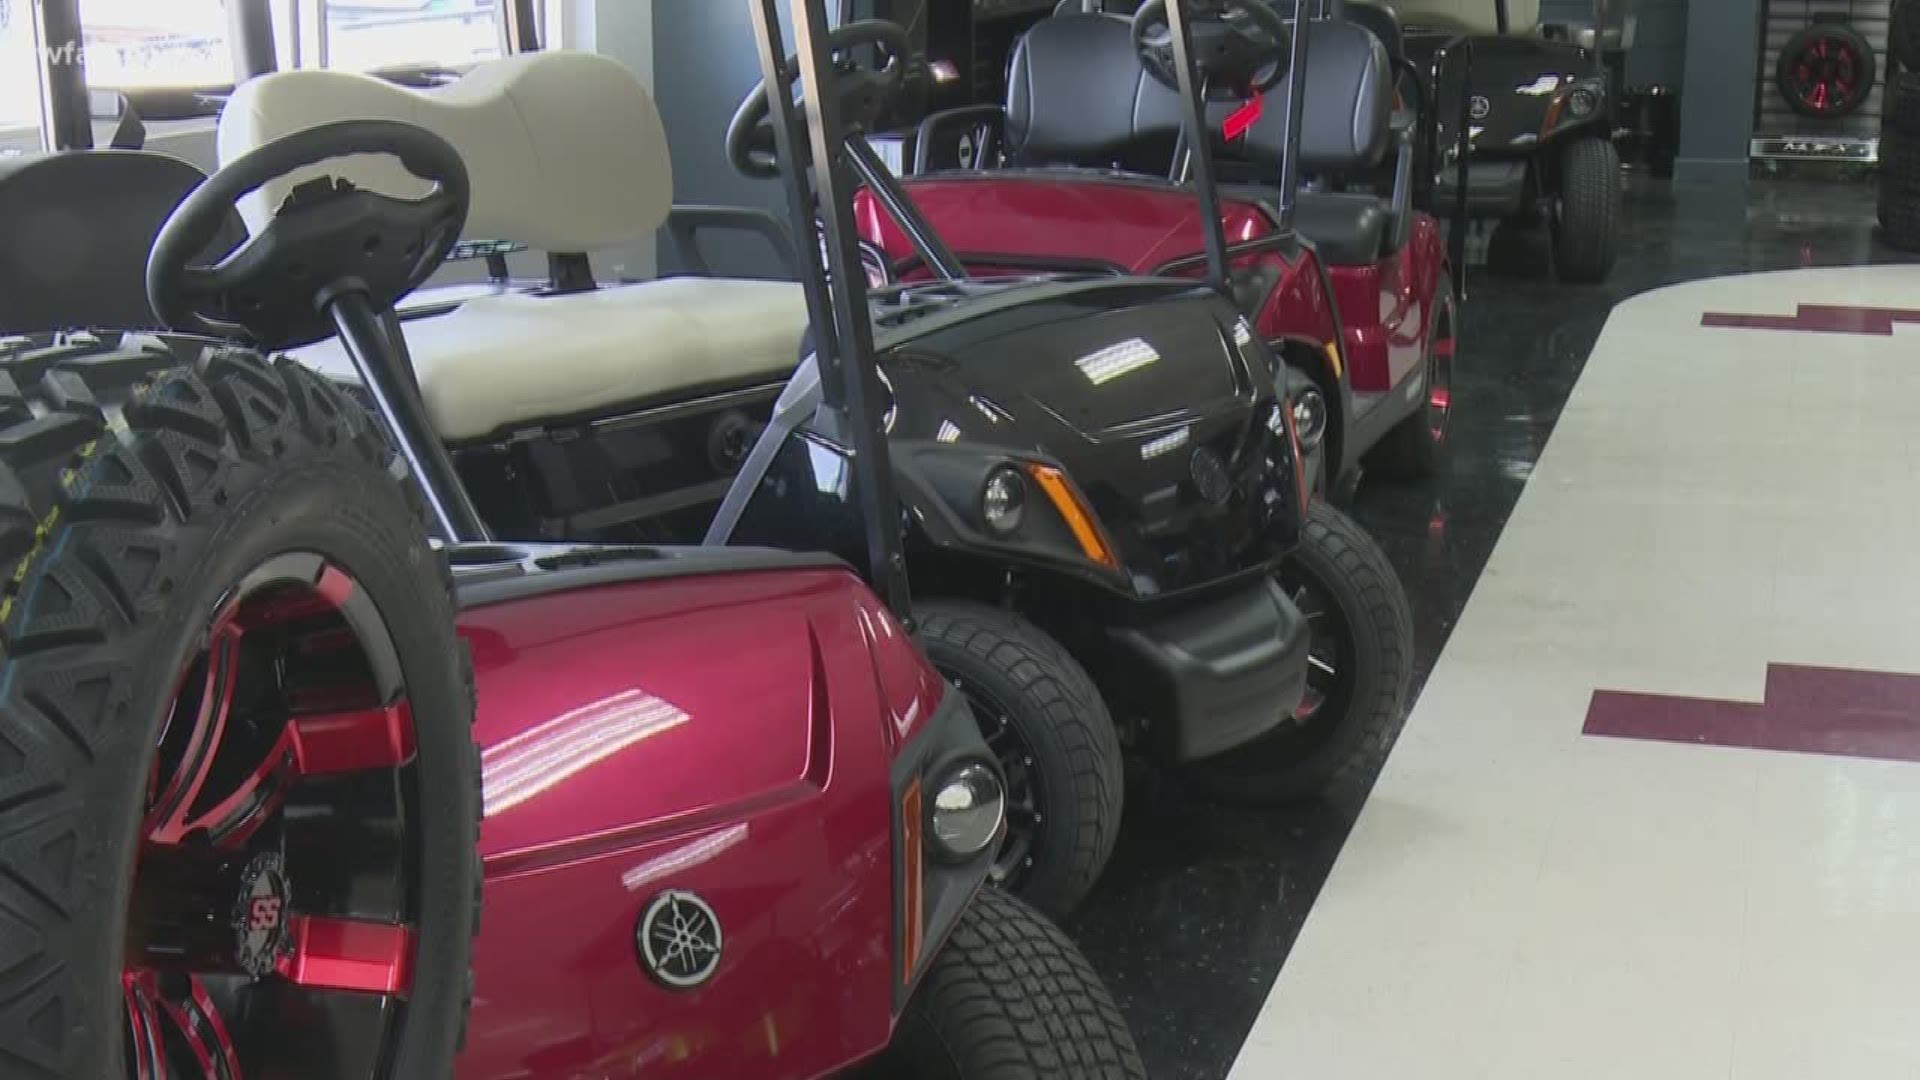 Golf Carts taking over North Texas neighborhoods